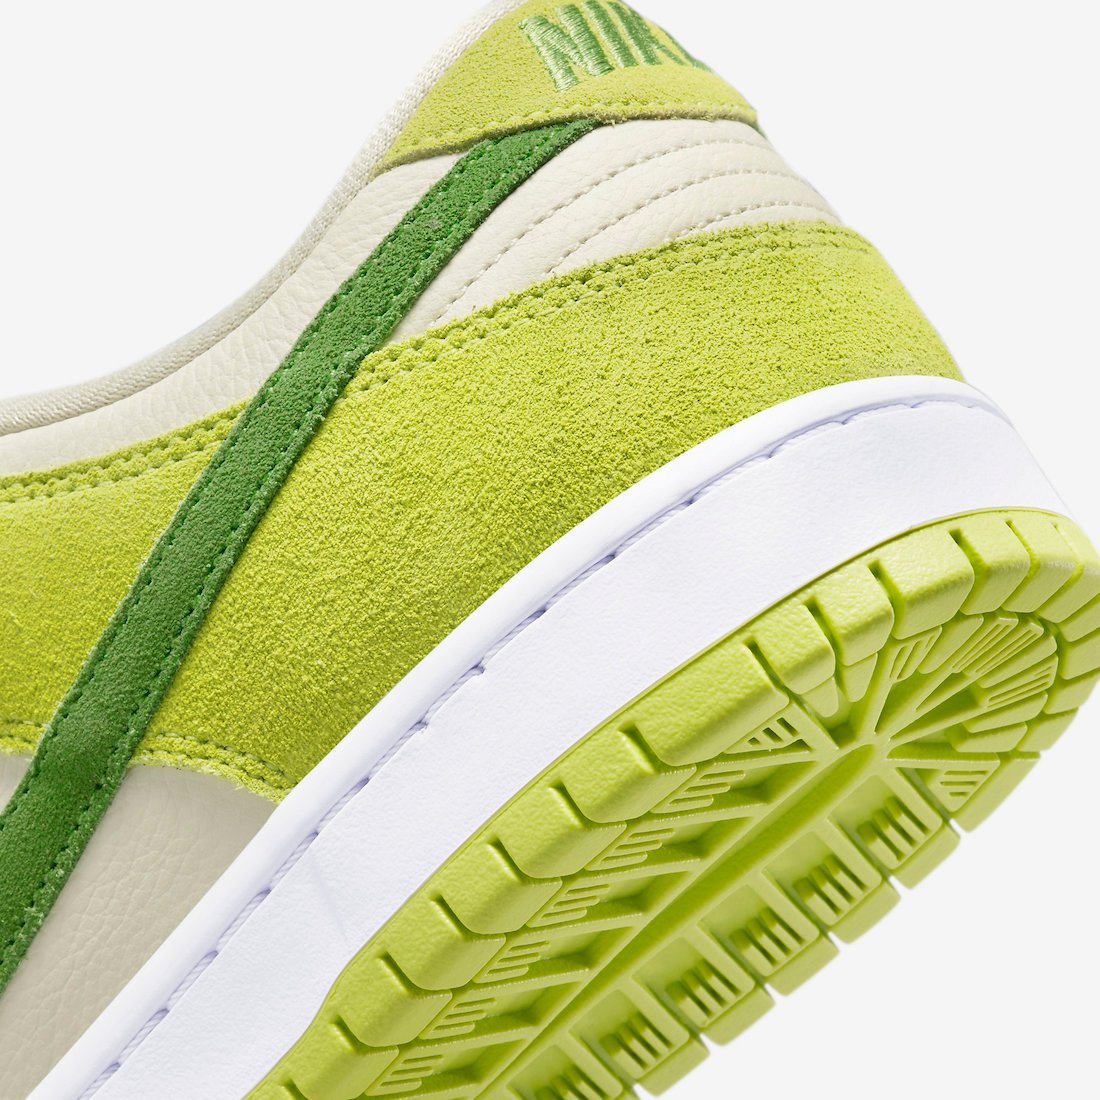 Nike SB Dunk Low Green Apple DM0807-300 Release Info Price